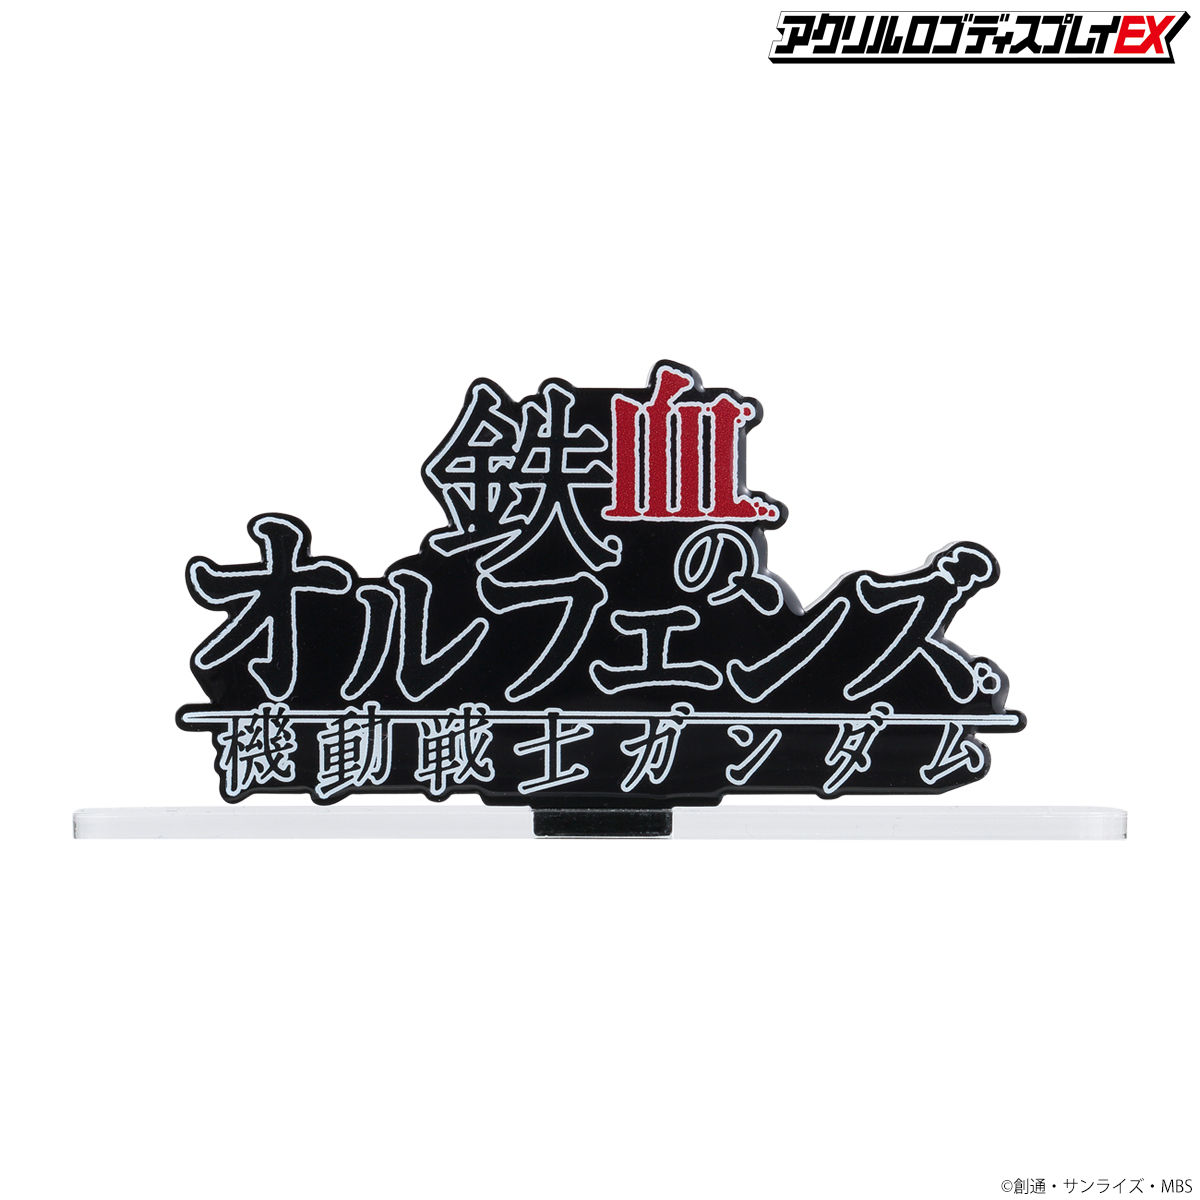 Acrylic Logo Diplay EX-Mobile Suit Gundam: Iron-Blooded Orphans